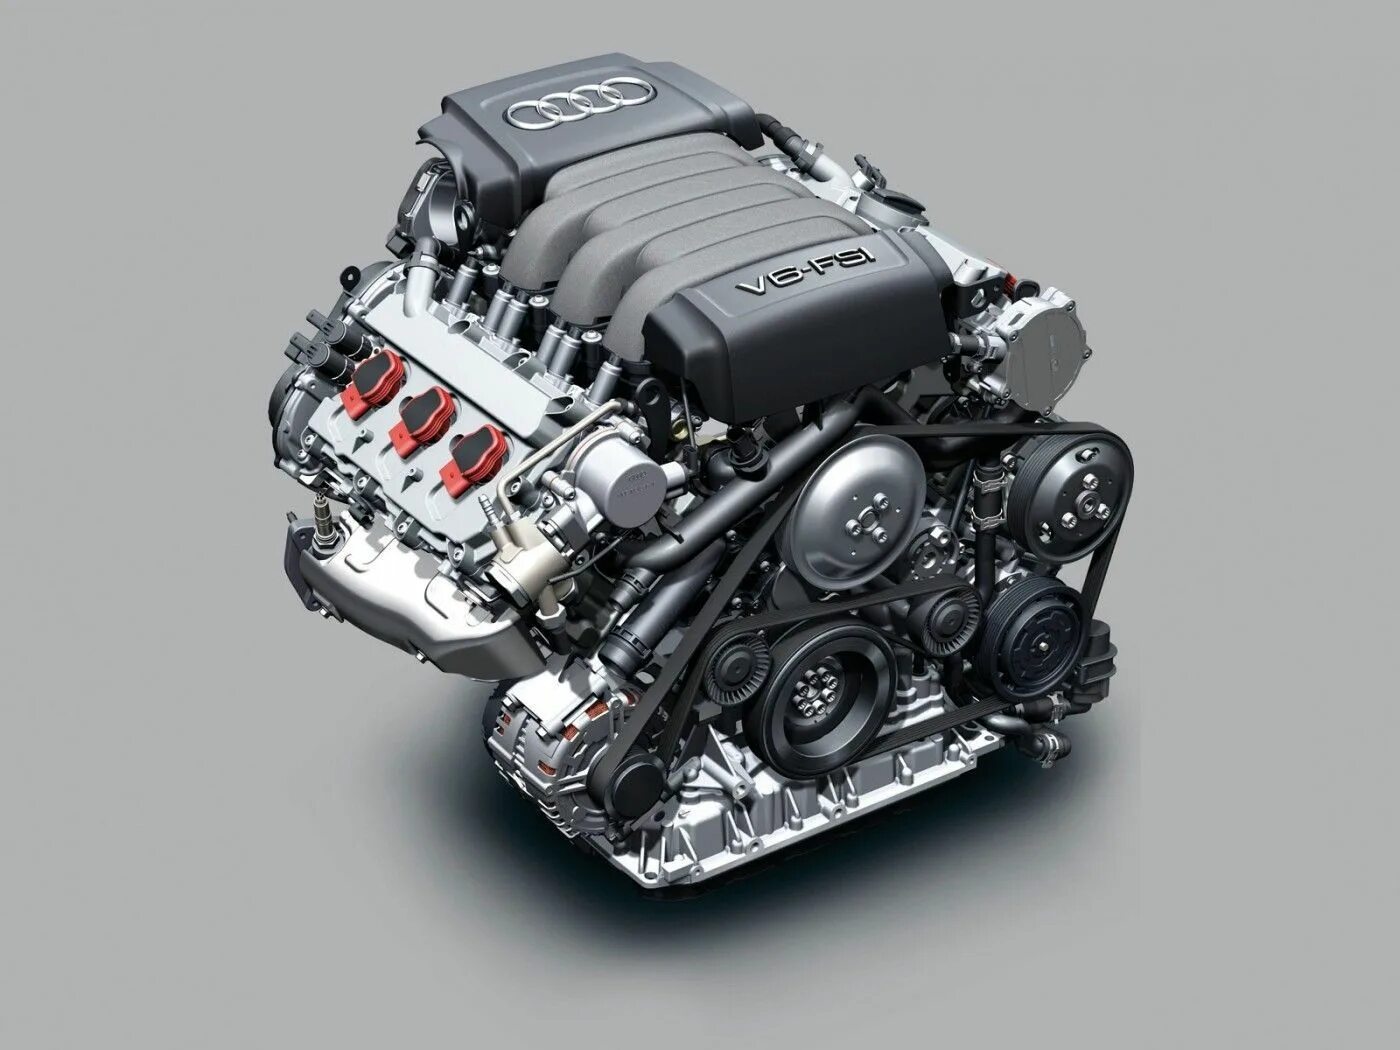 Ауди двиг. Мотор 3.2 Ауди. Двигатель Ауди v6 FSI. Audi 3.2 FSI. Двигатель 3.2 TFSI Audi.